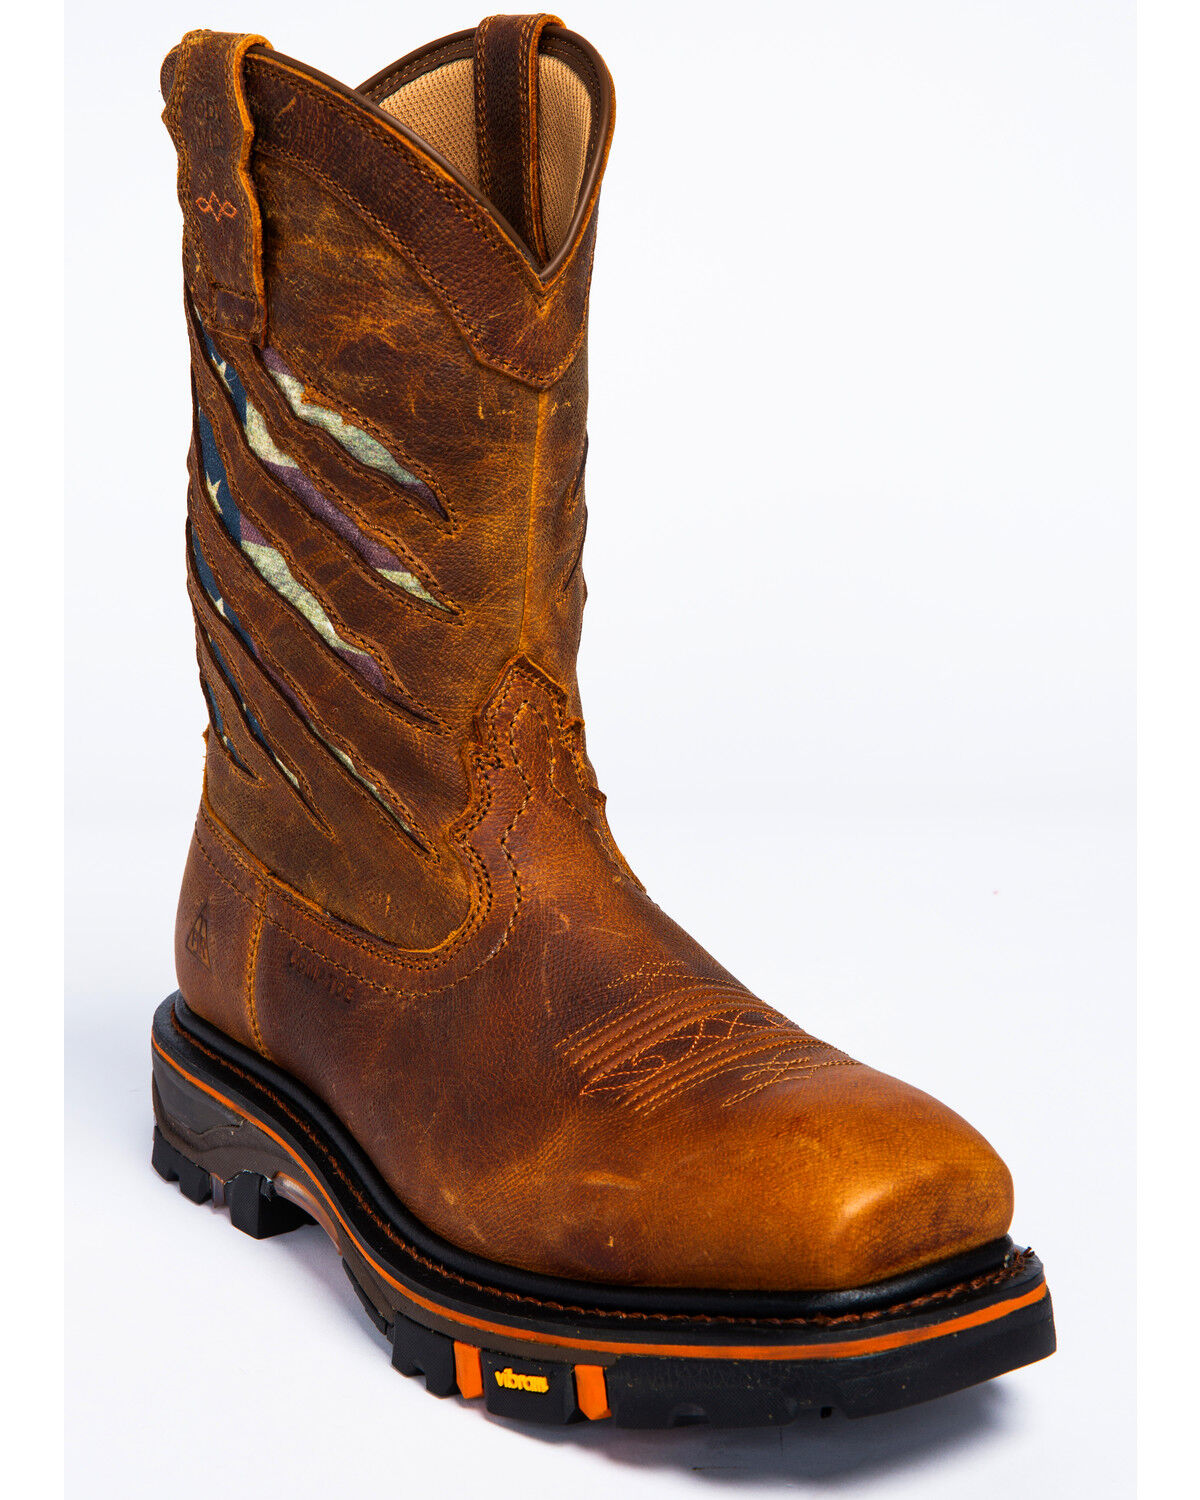 slip resistant cowboy boots womens